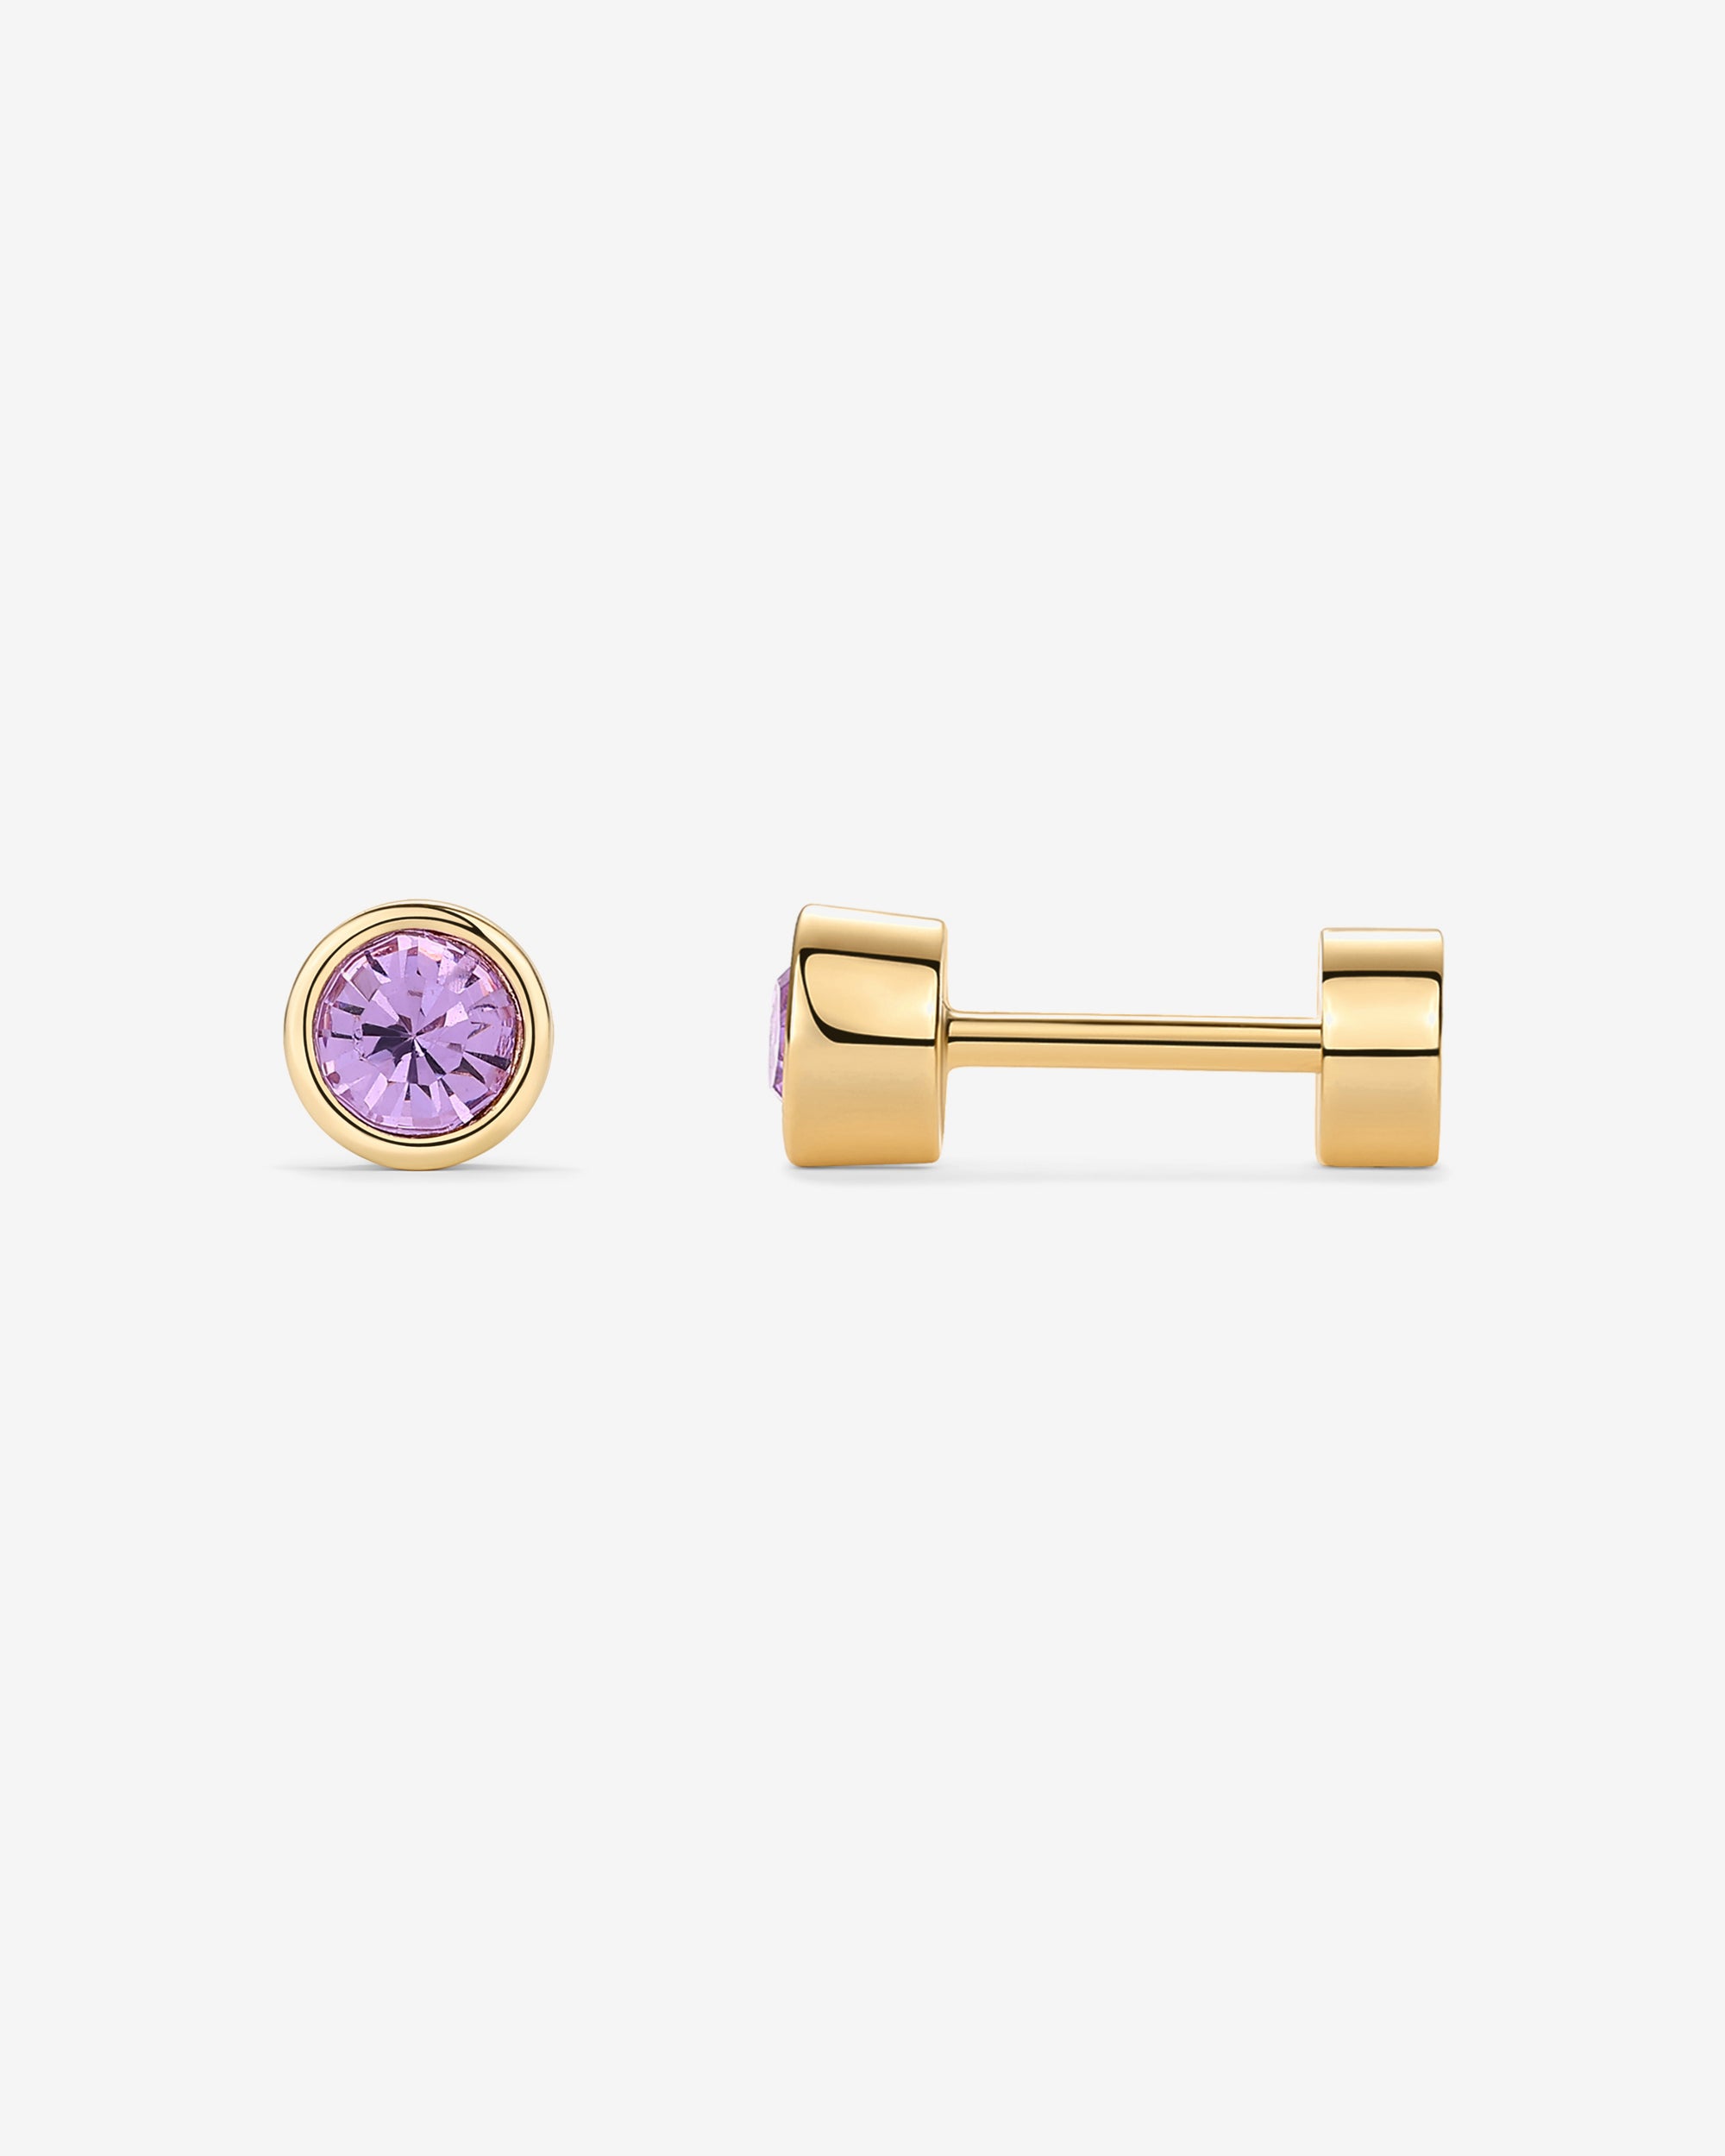 Tiny Flower Screw Back Gold Stud Earrings for Women by PAVOI